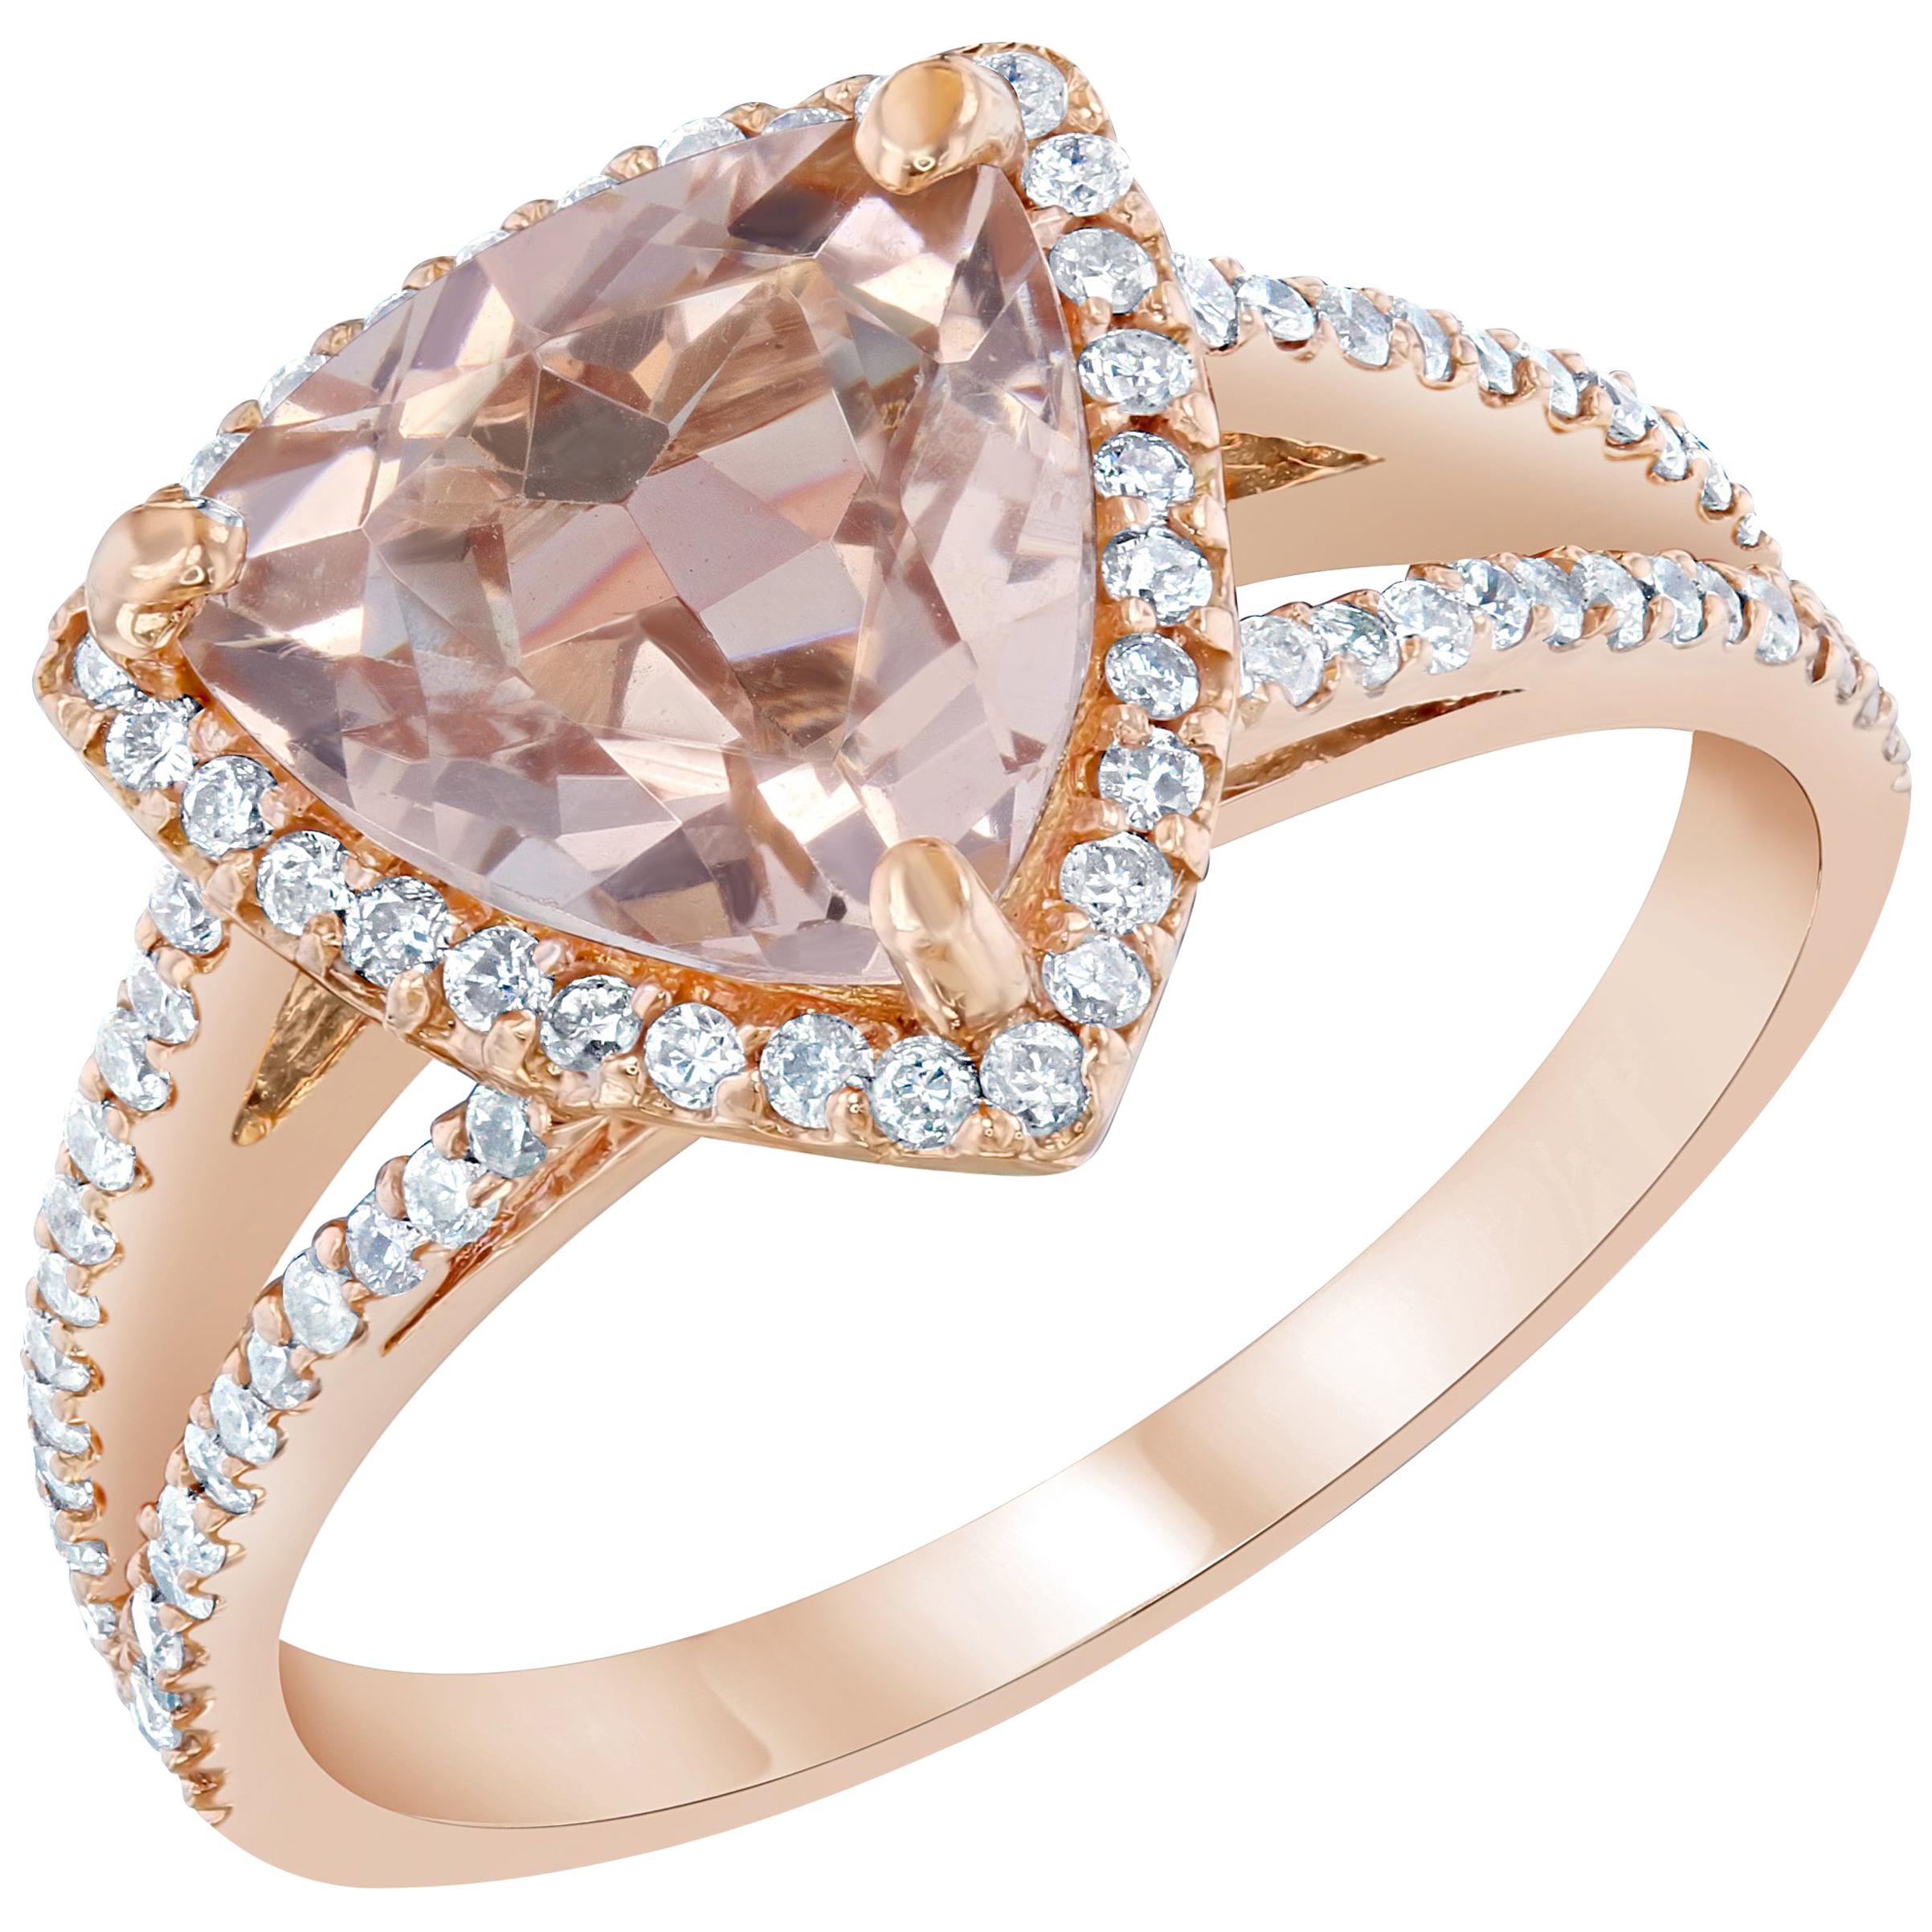 Bague halo en or rose 14 carats avec Morganite de 2,87 carats et diamants